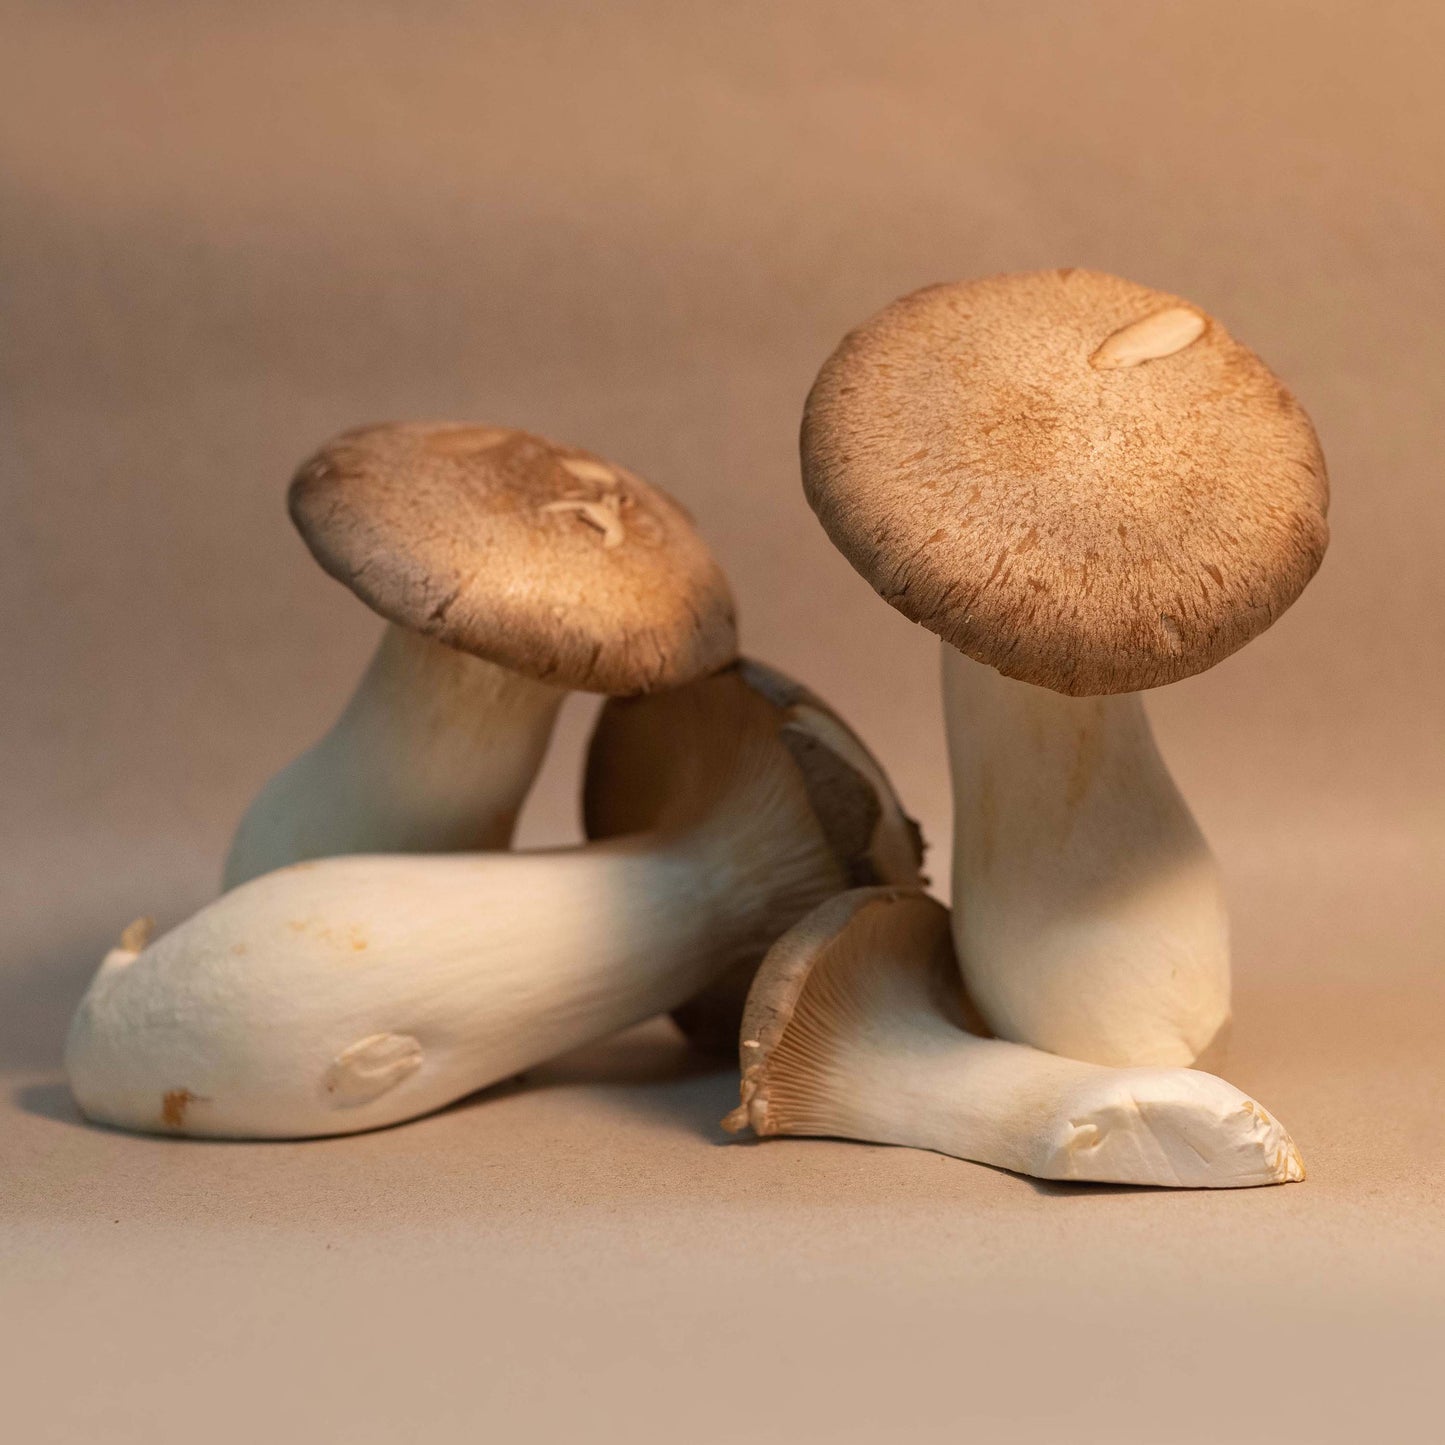 Organic King Oyster Mushrooms